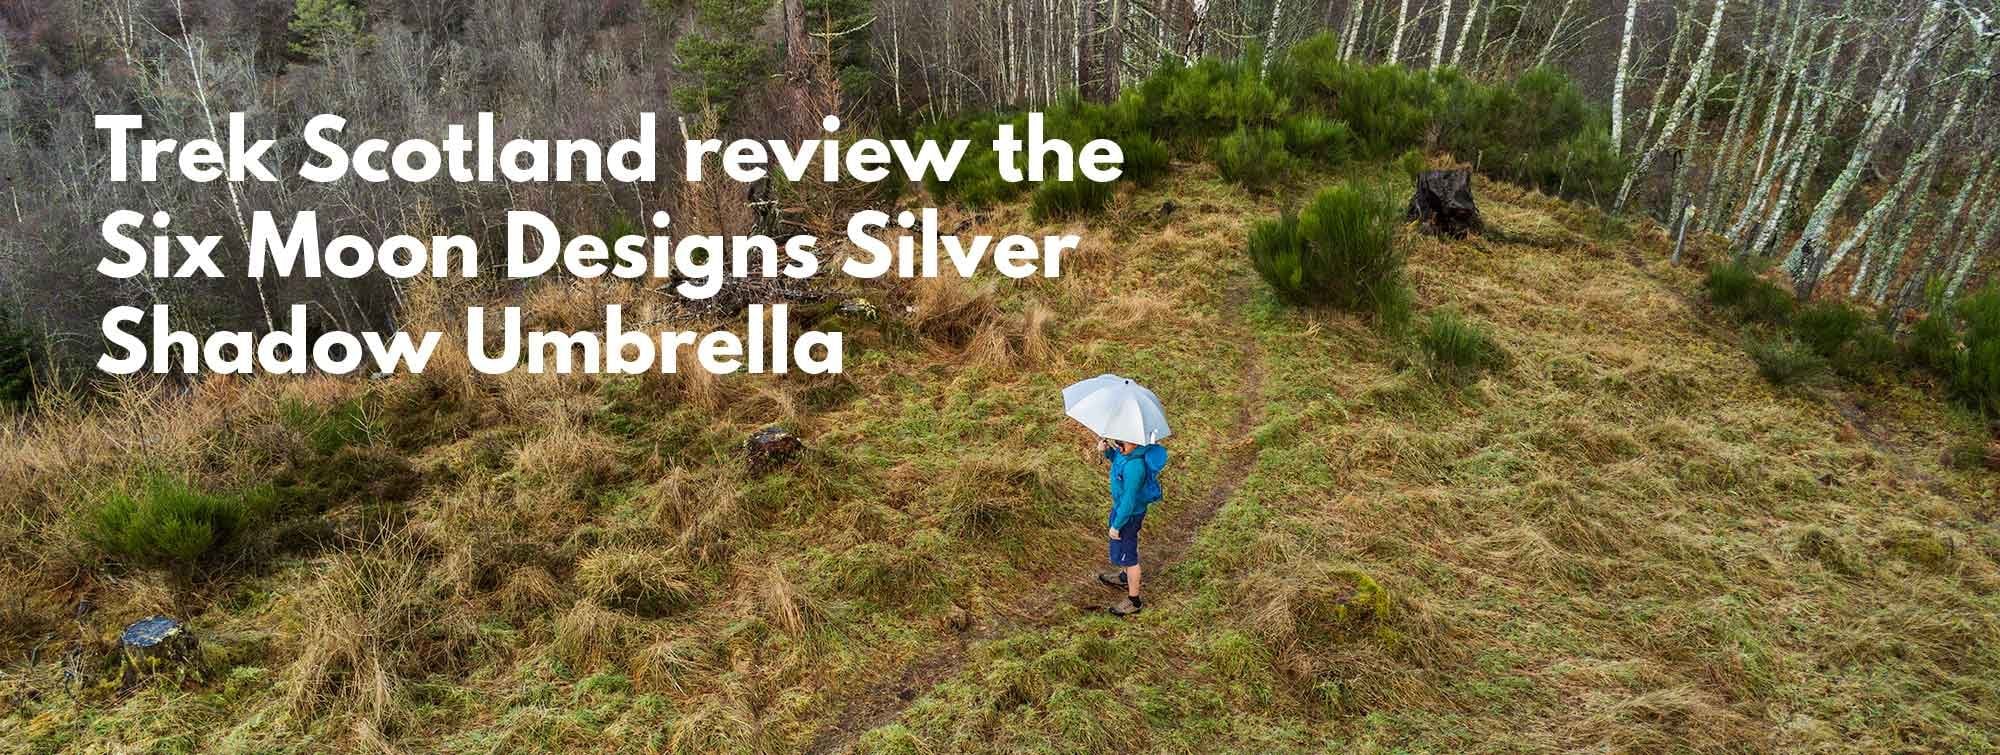 Six Moon Designs Silver Shadow Carbon Trekking Umbrella Reviews